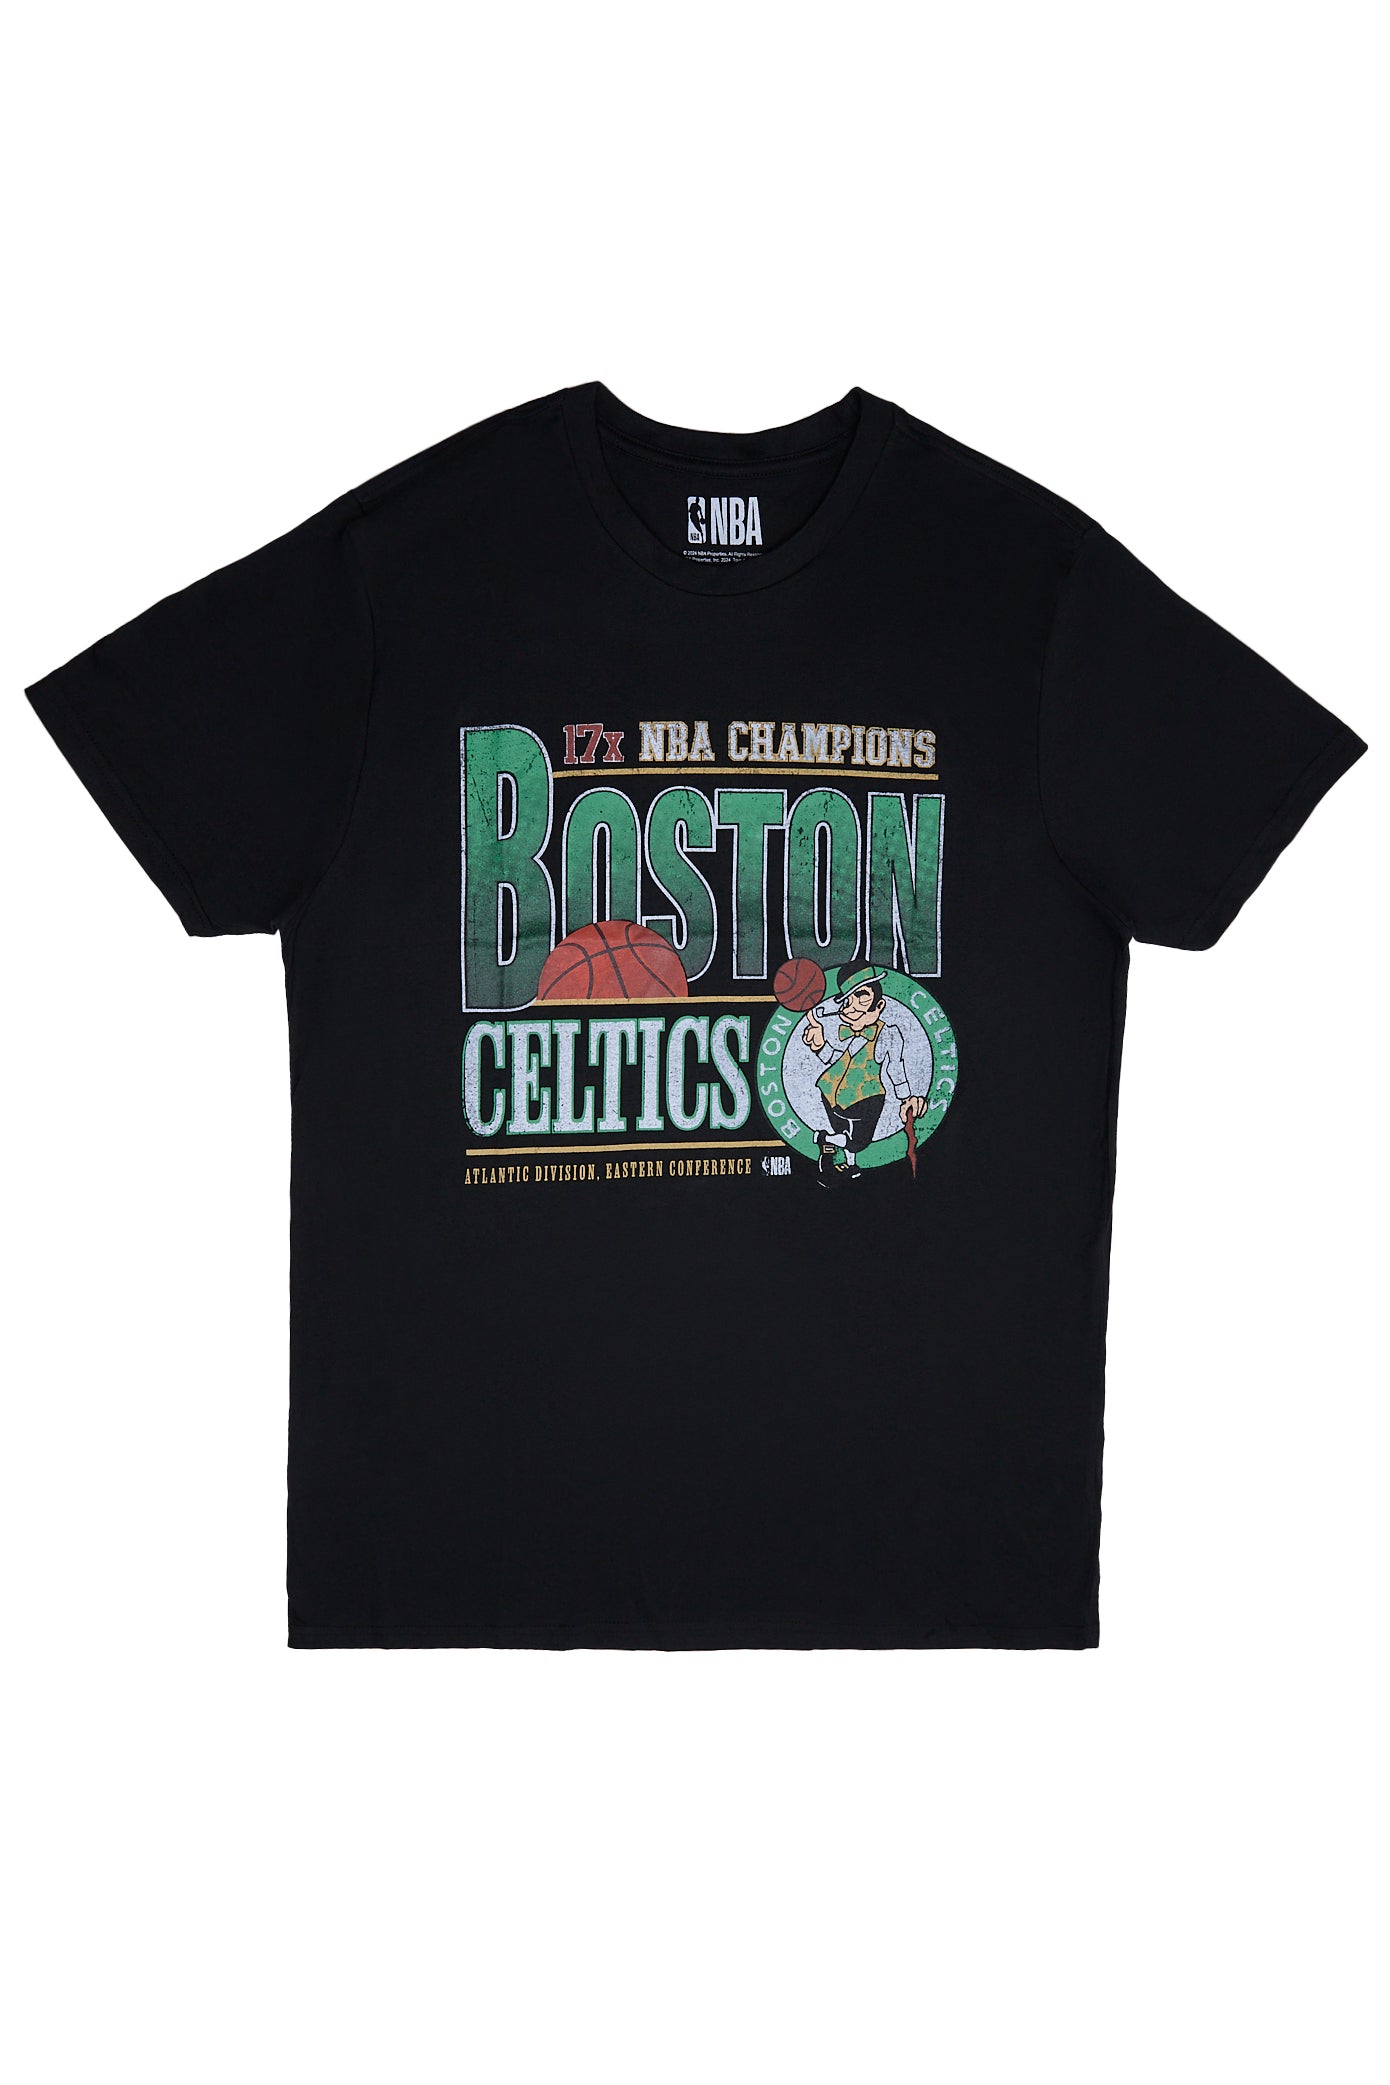 Boston Celtics NBA Champions Graphic Tee